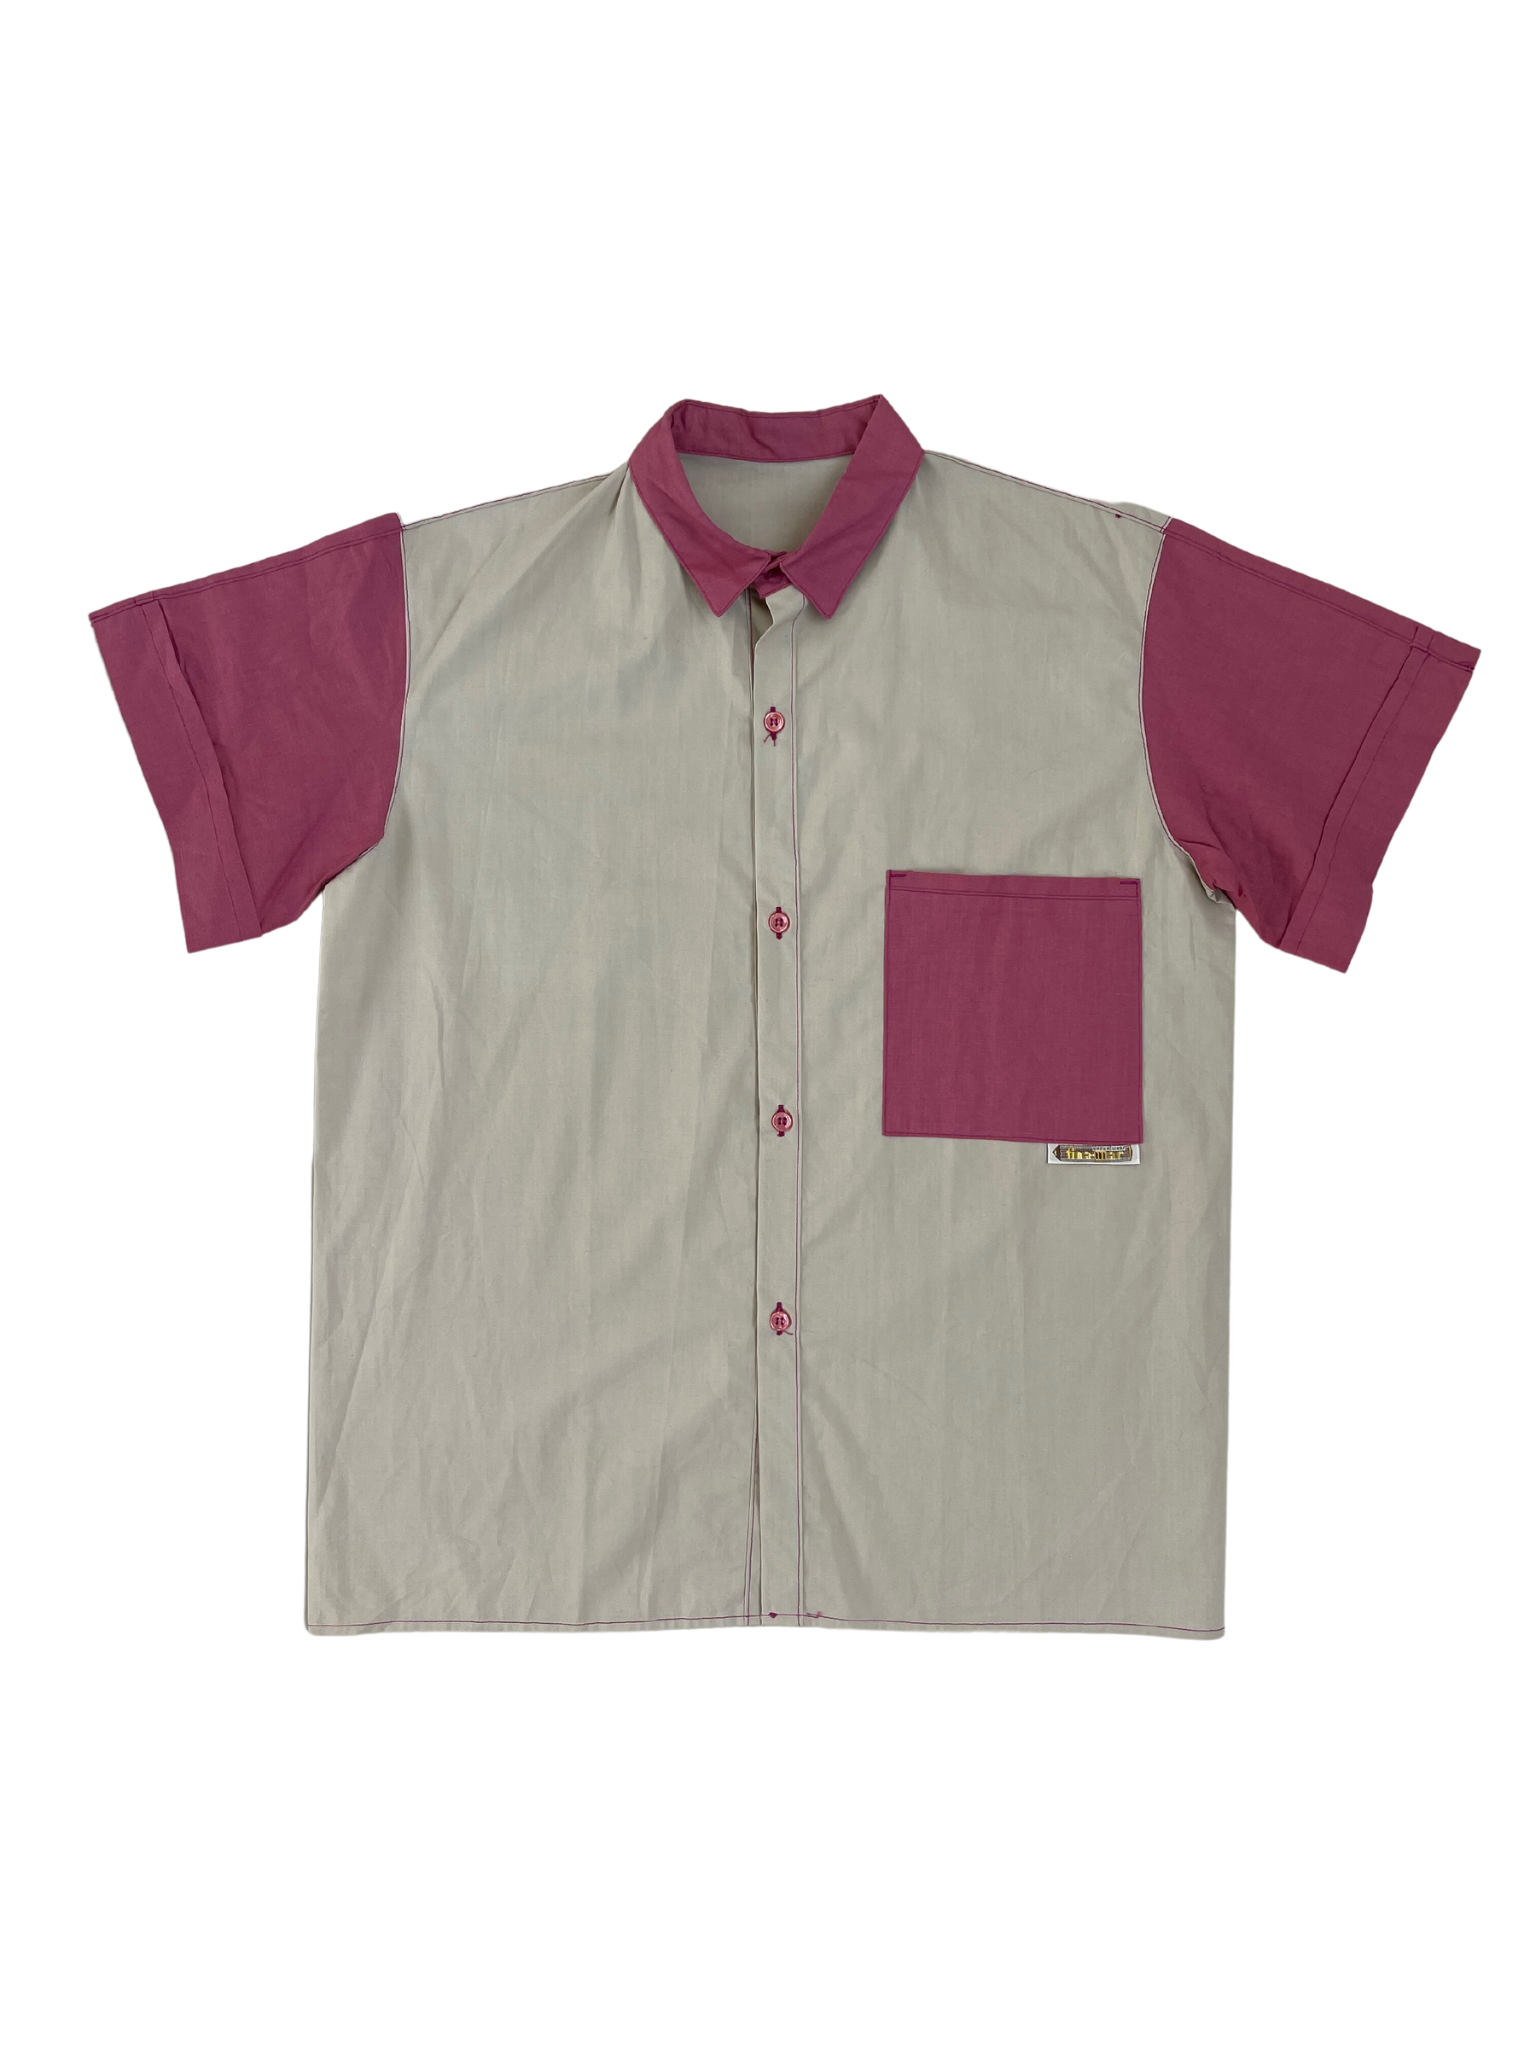 Italian short sleeve shirt from 1973